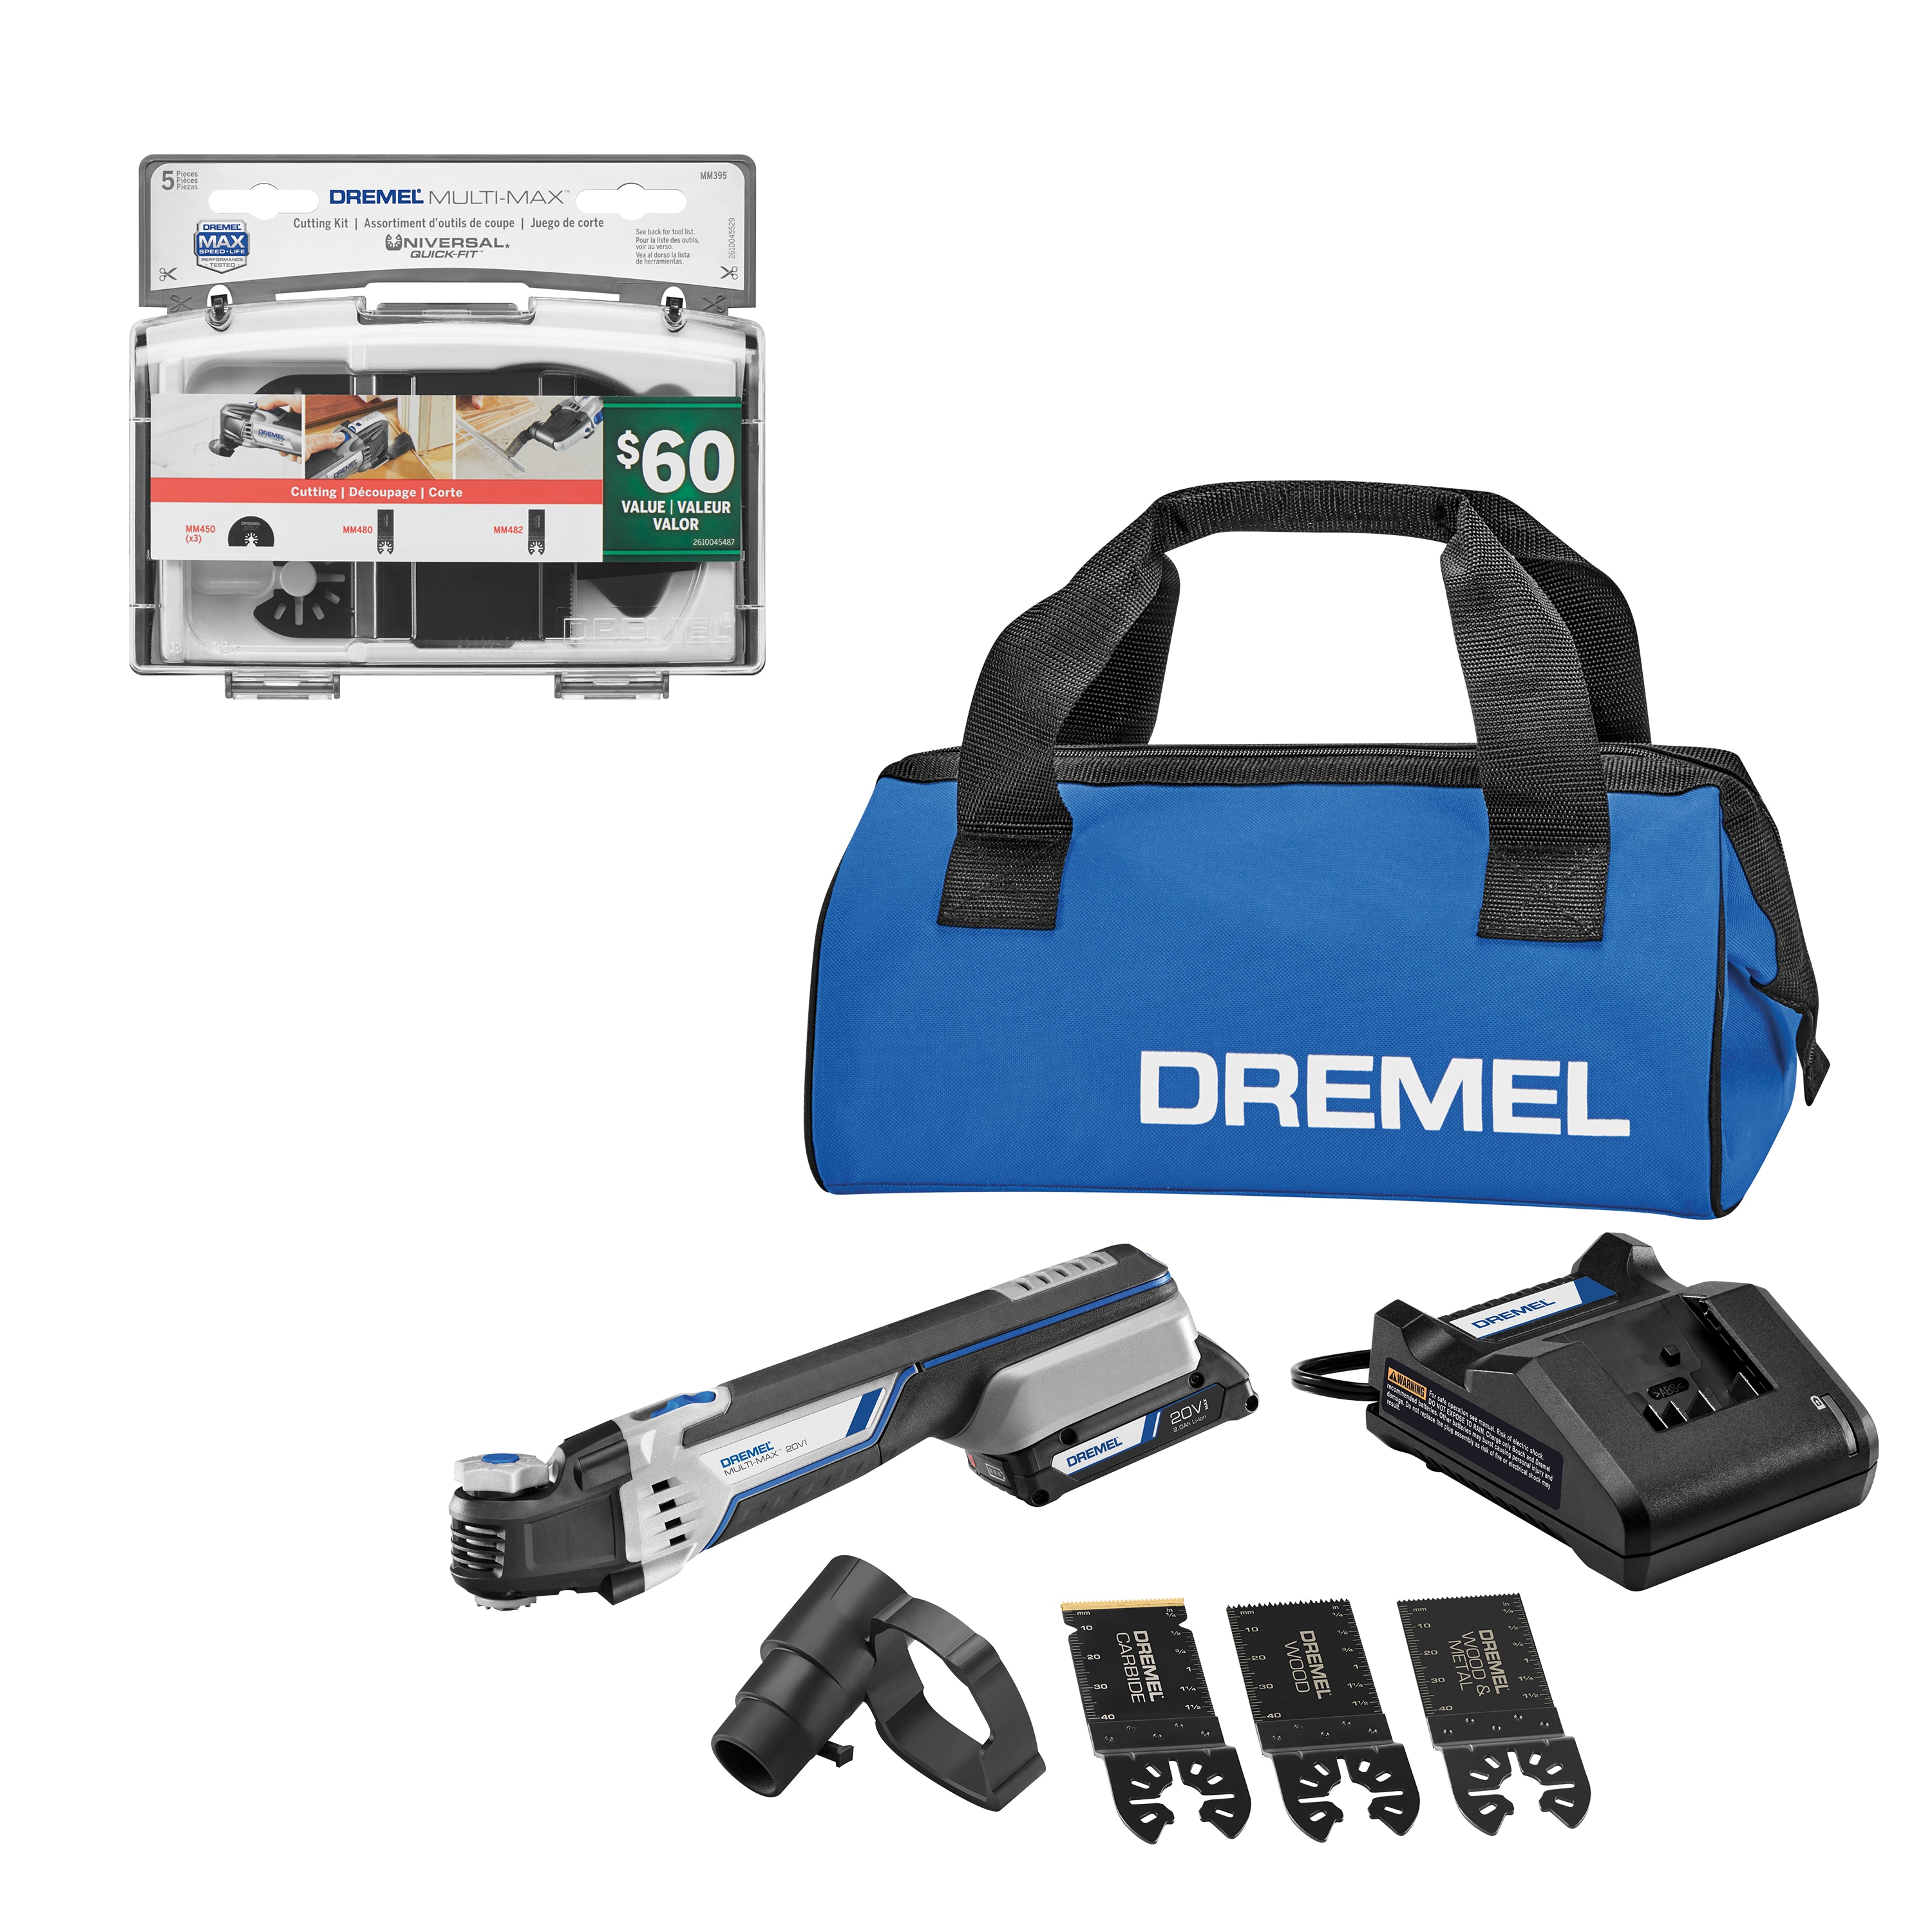 Dremel Multi-Max 20V Variable Speed Cordless Oscillating Multi-Tool Kit with 3 Blades + 5-Piece Blade Set